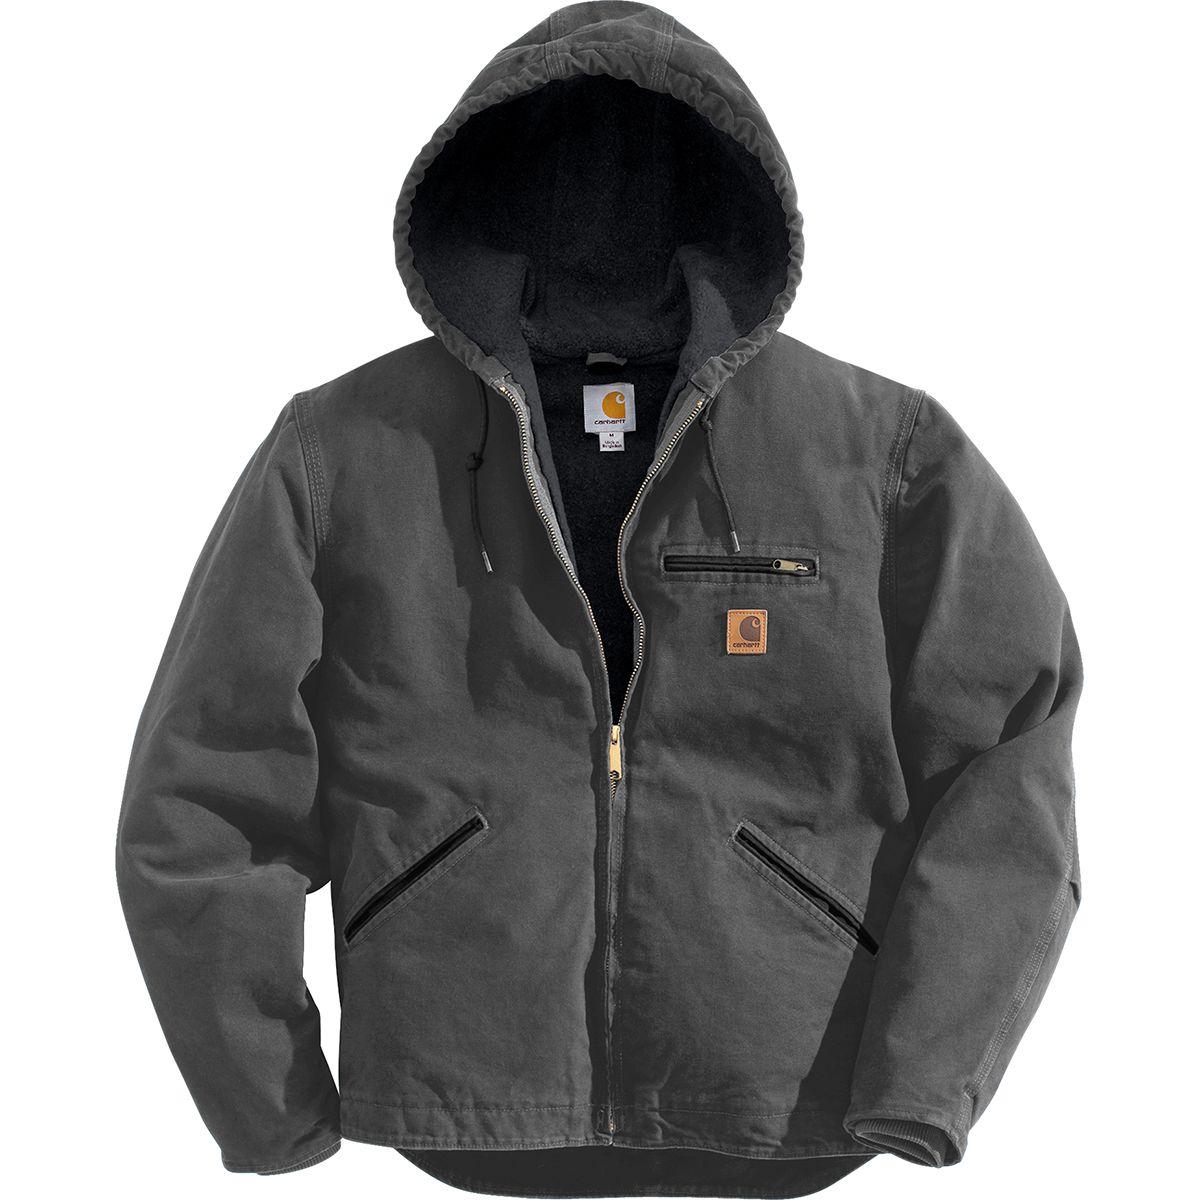 Carhartt Cotton Sandstone Sierra Jacket in Black for Men - Lyst